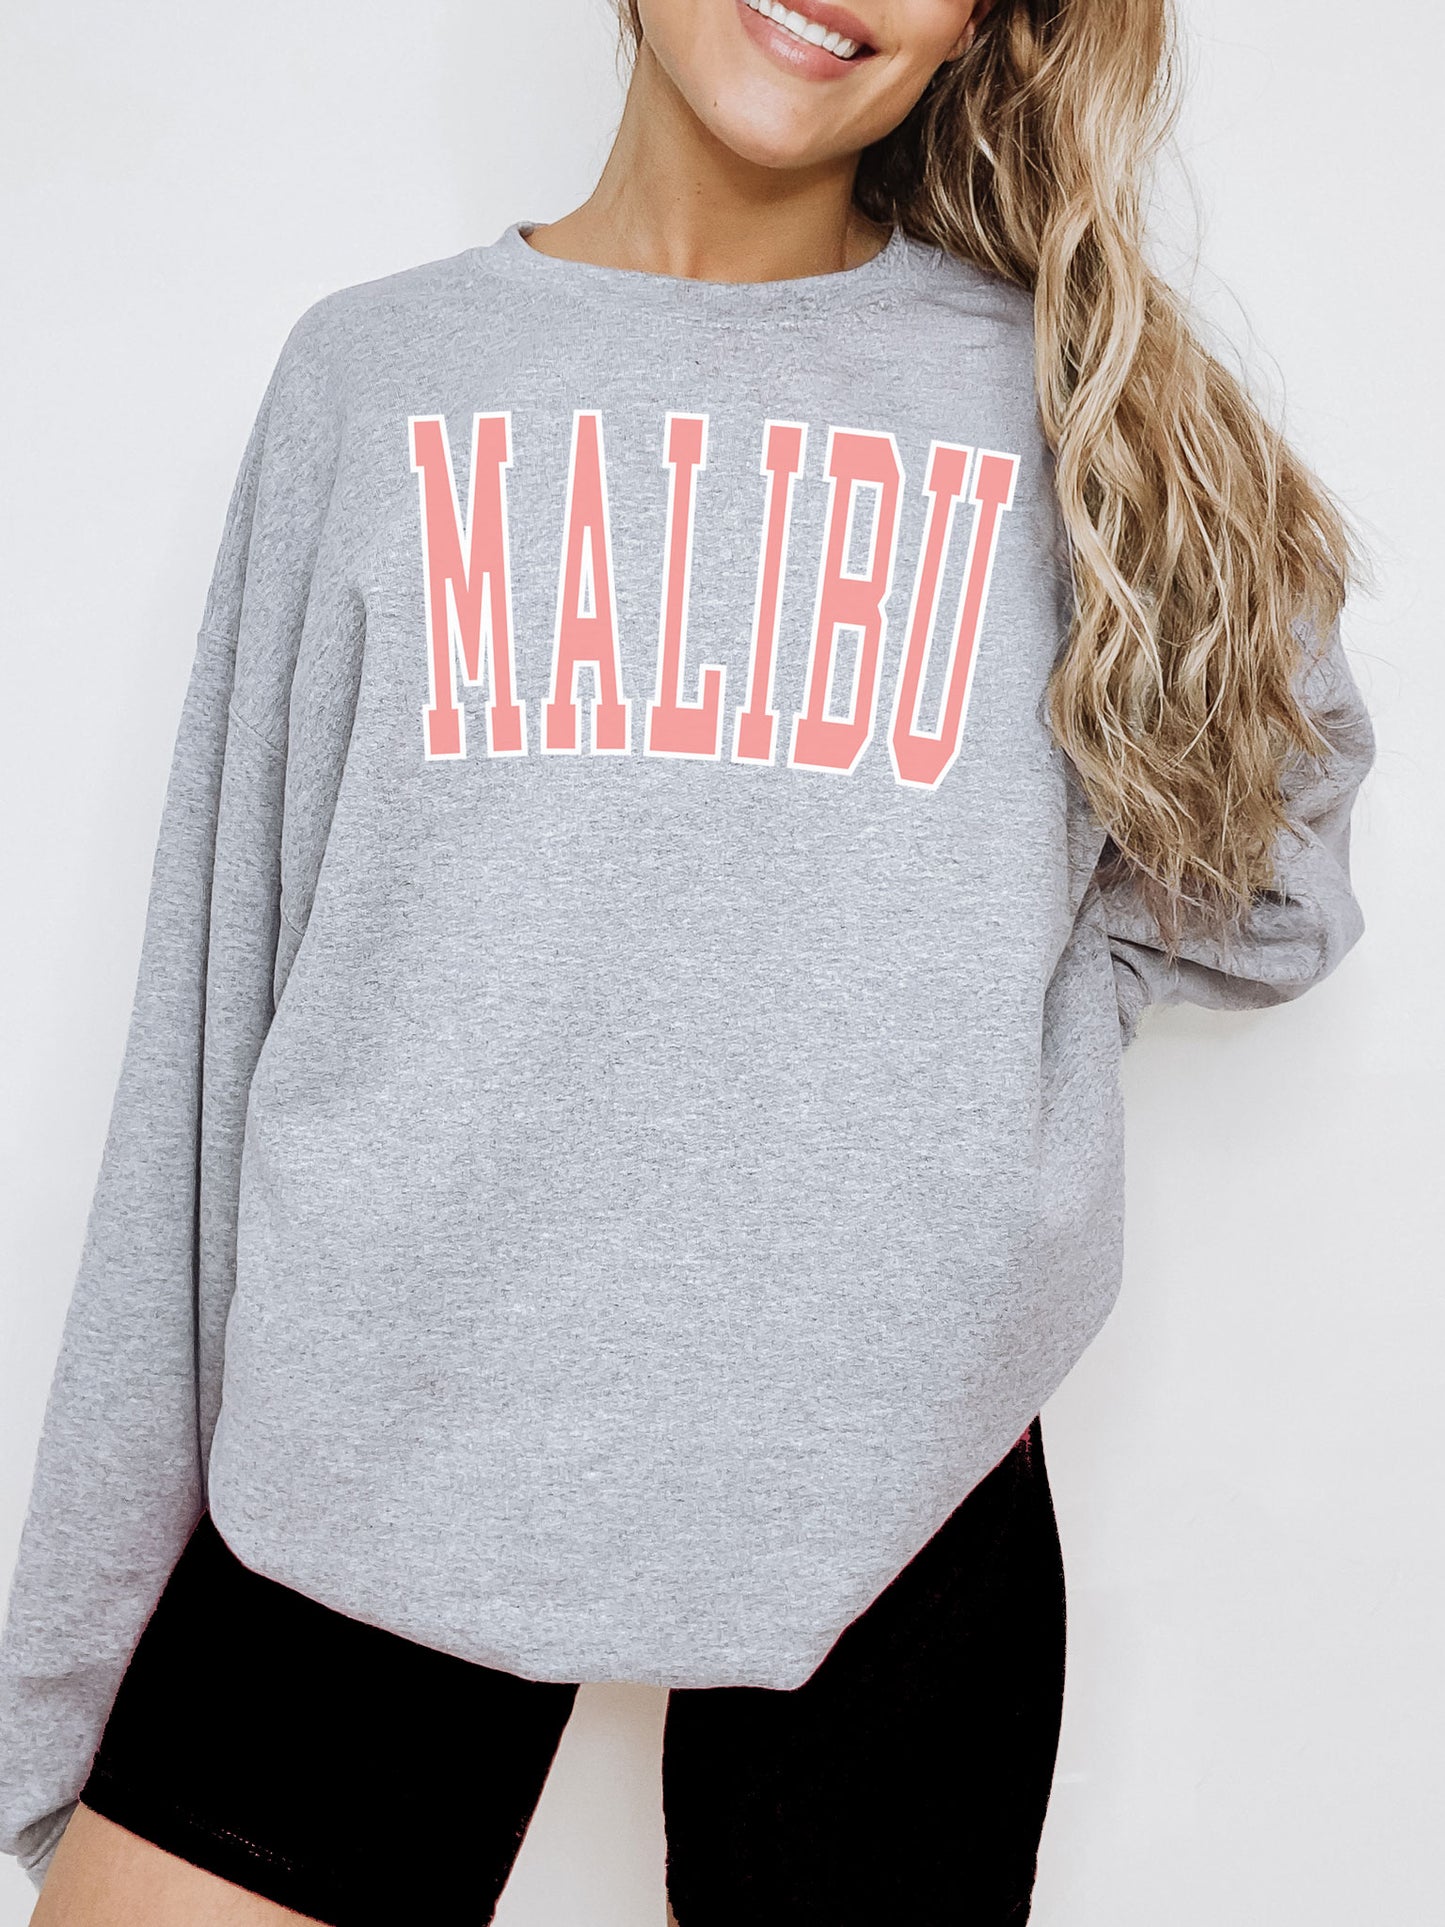 Malibu Sweatshirt - Peach Ink